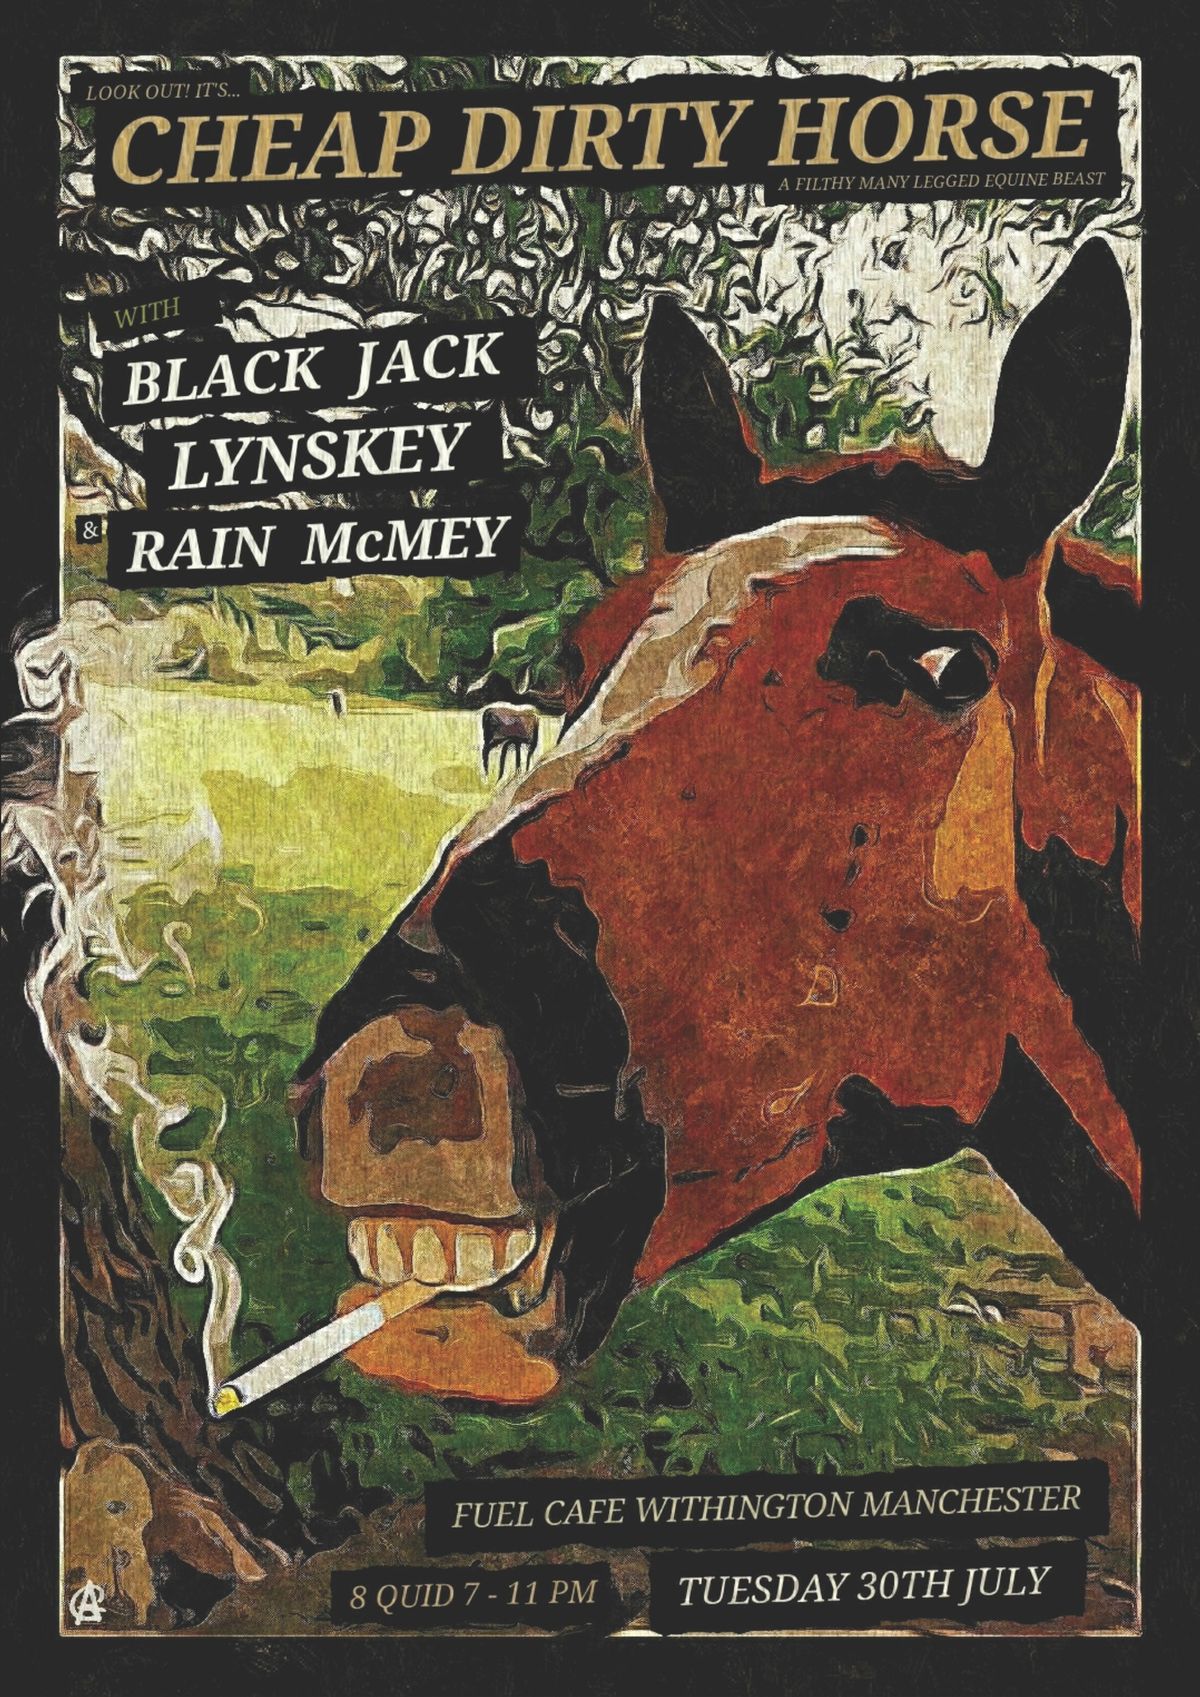 Cheap Dirty Horse, Black Jack, Lynskey, Rain McMey @ Manchester Fuel Cafe Bar